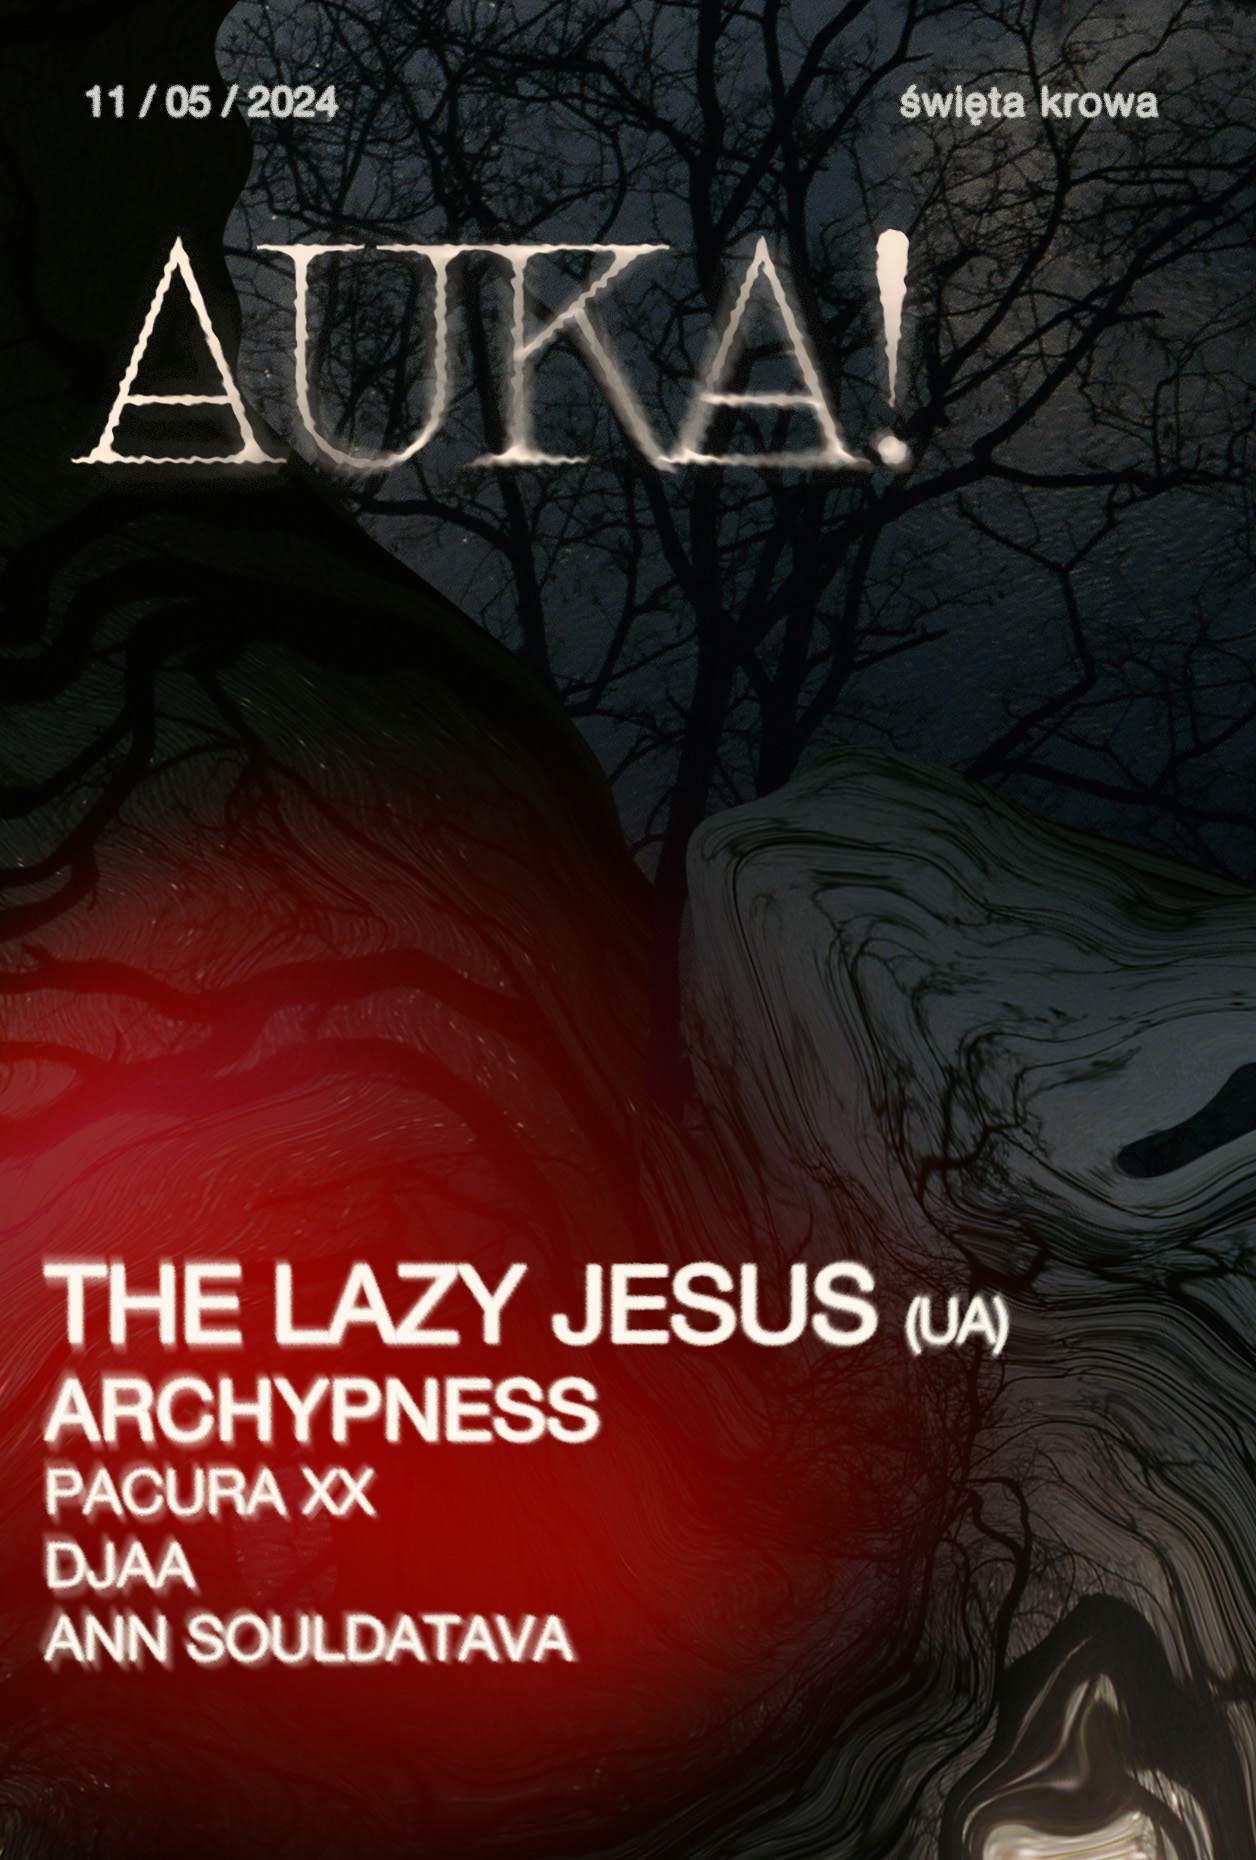 AUKA! with The Lazy Jesus (UA) - Página frontal